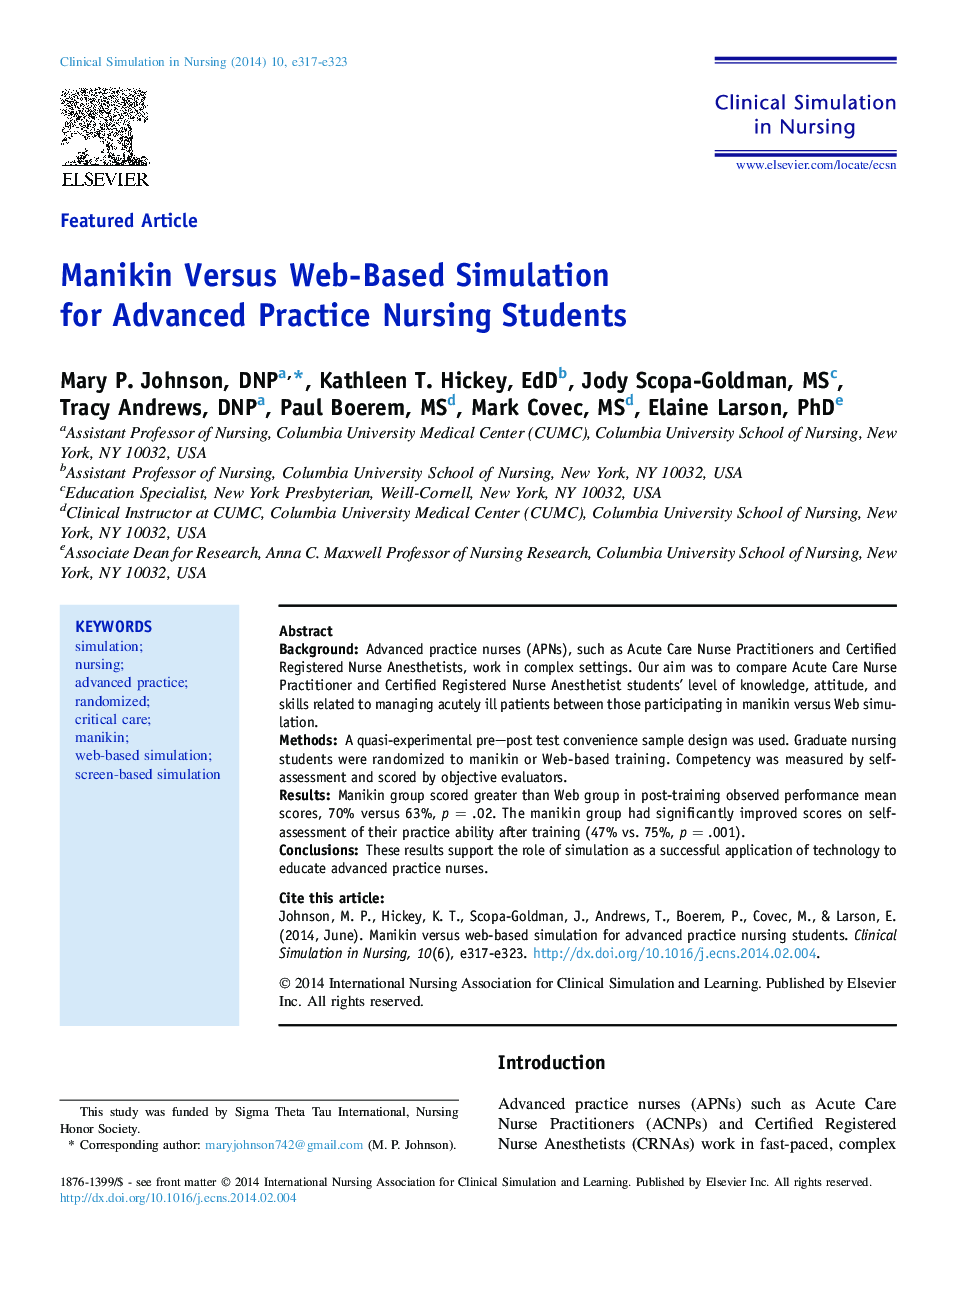 Manikin Versus Web-Based Simulation for Advanced Practice Nursing Students 